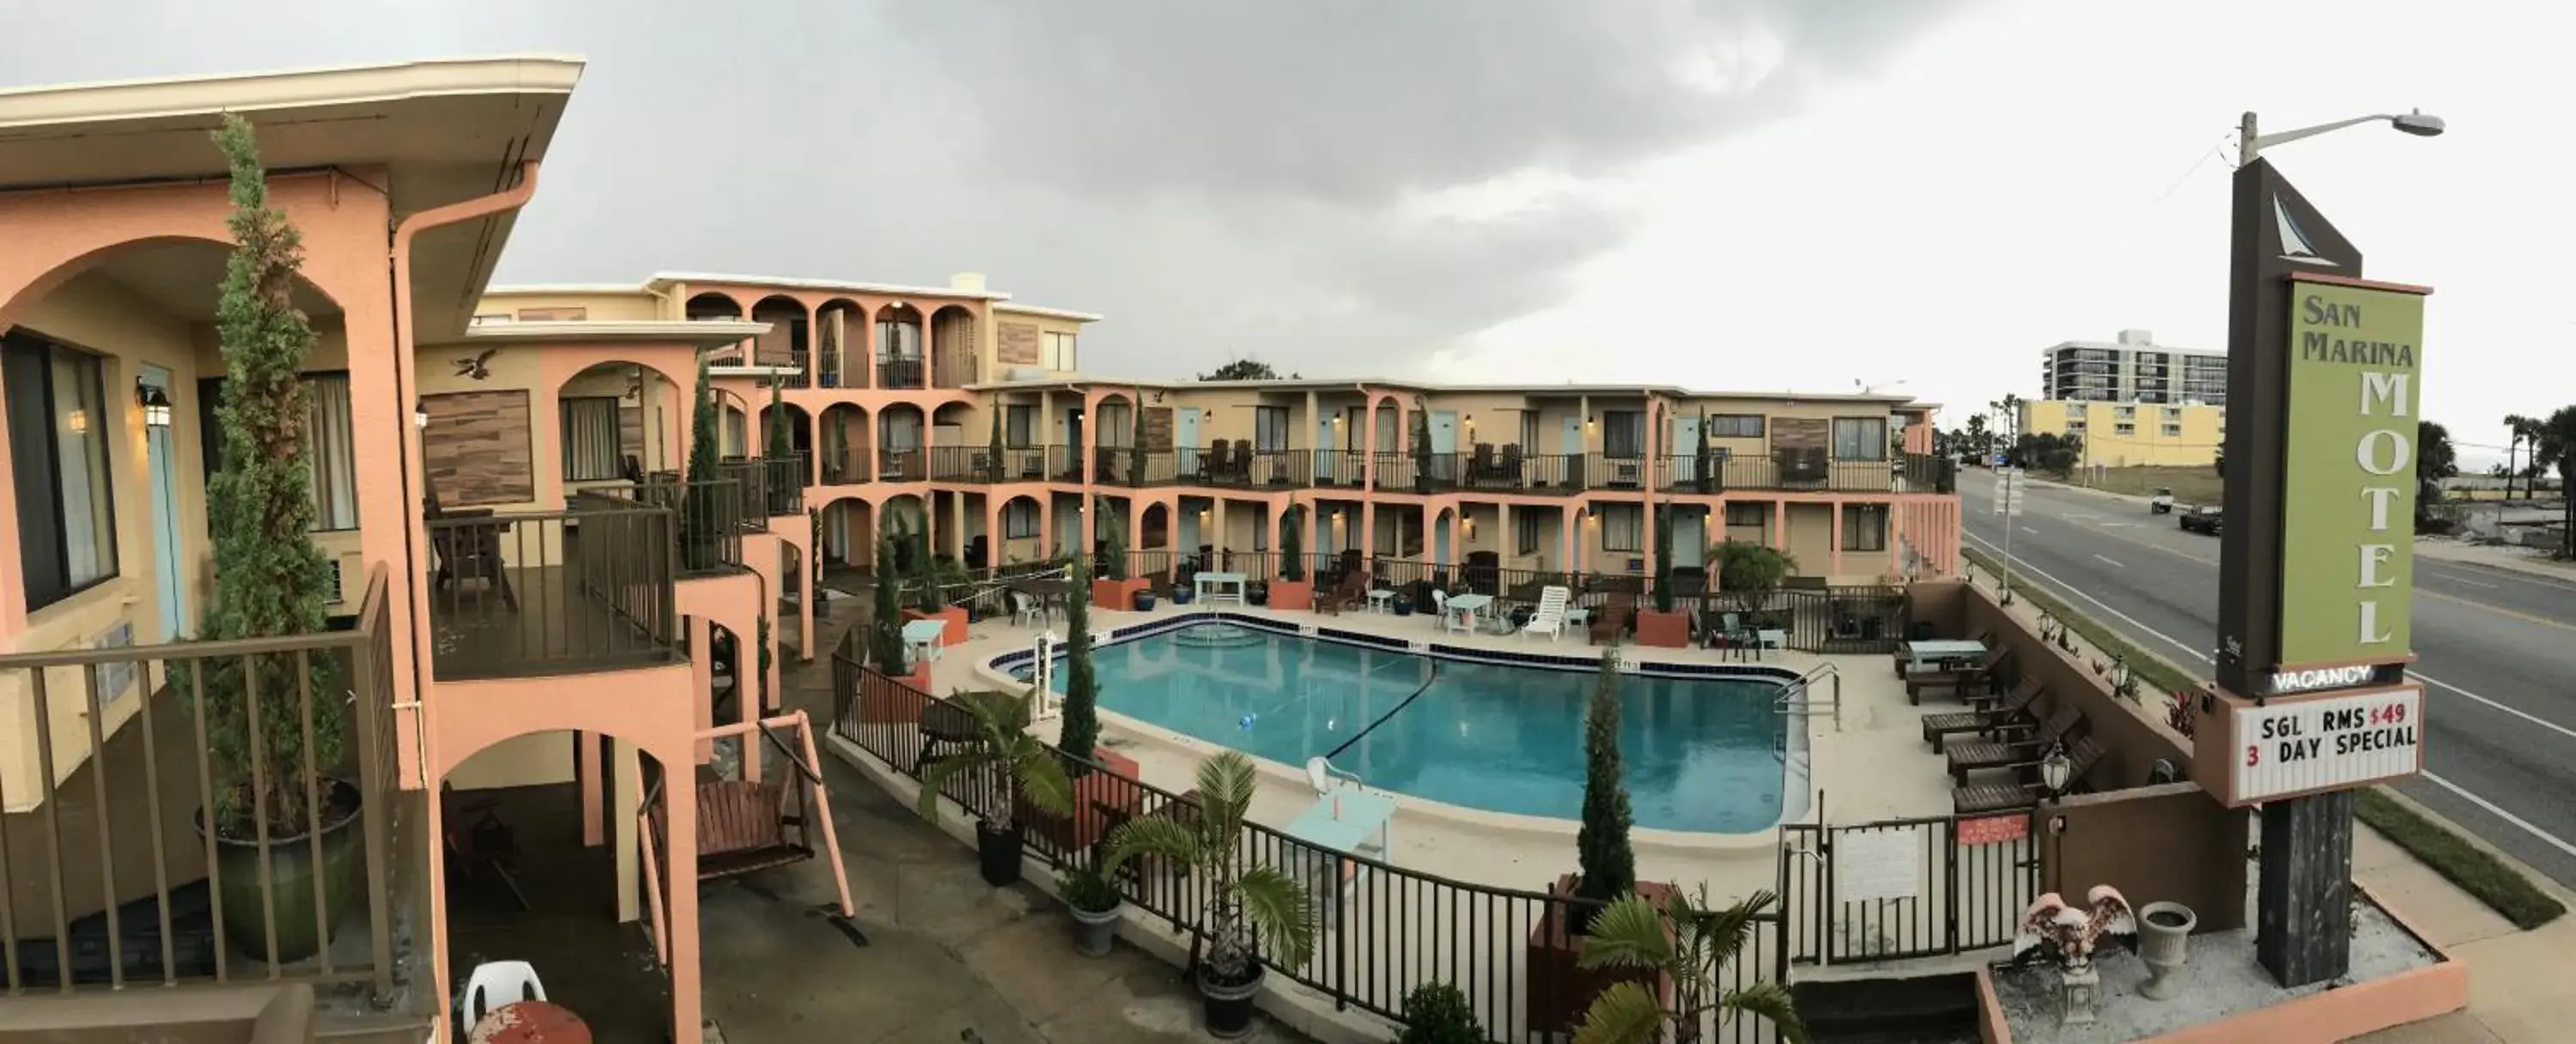 Pool View in San Marina Motel Daytona